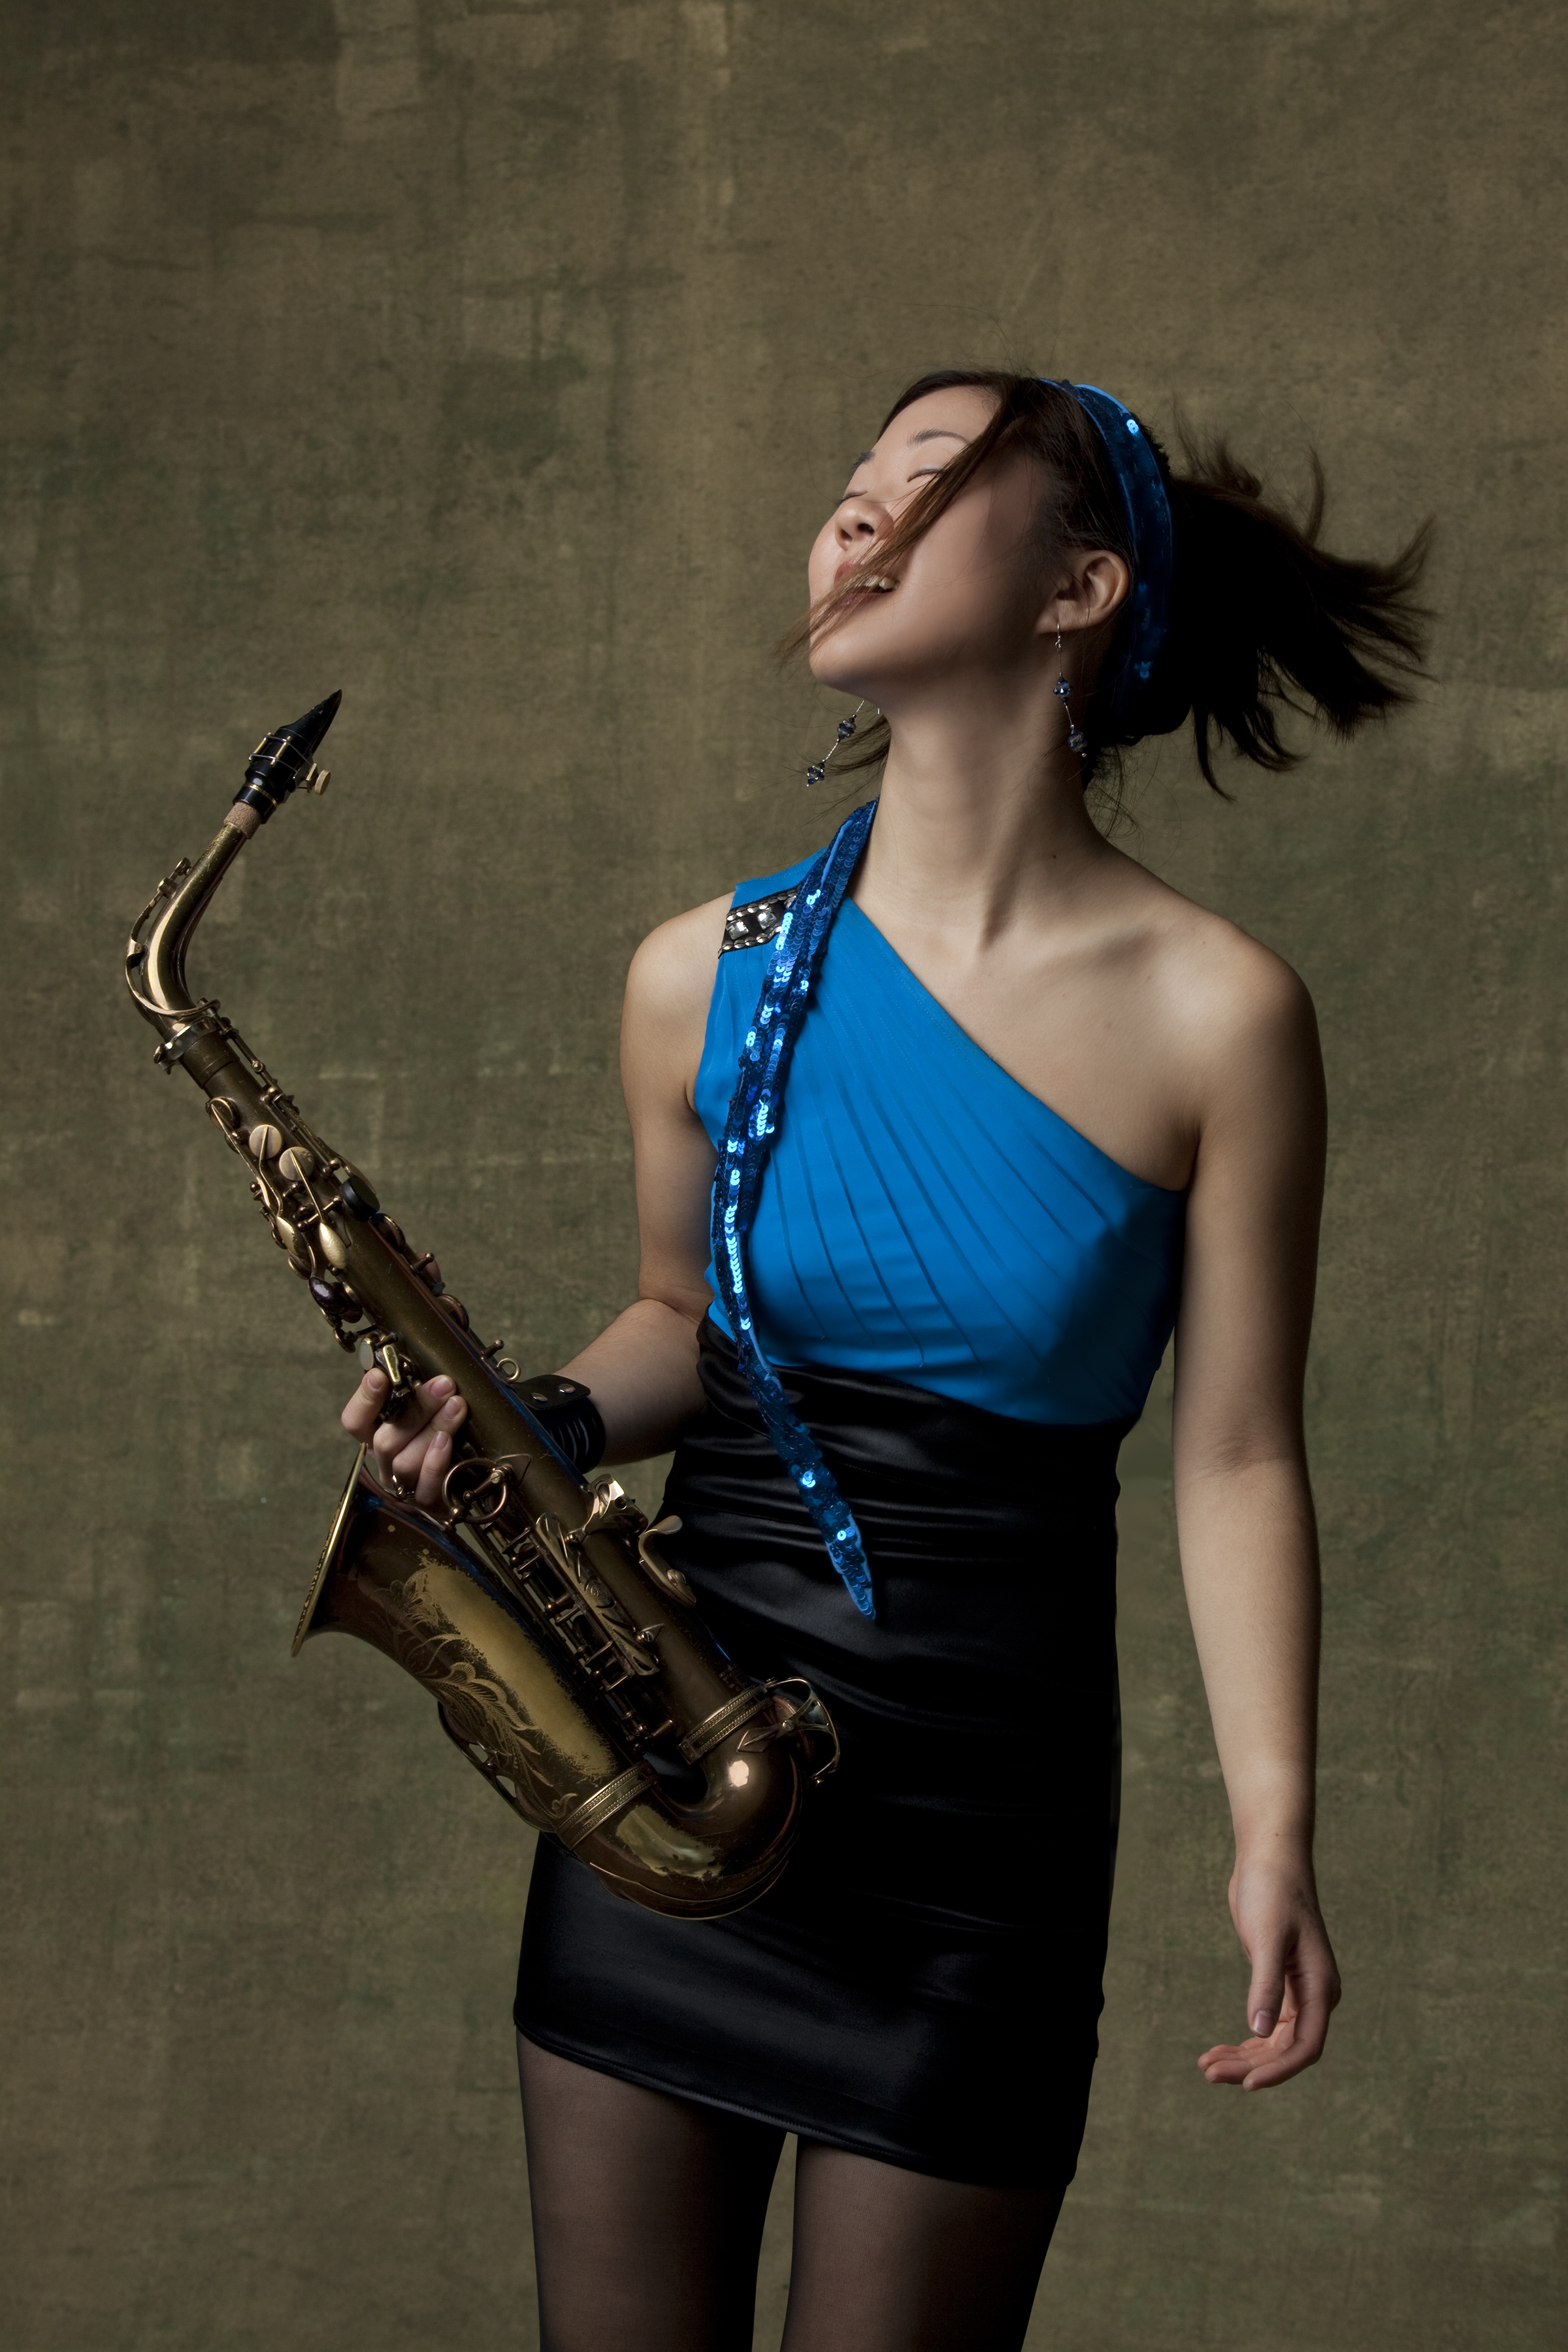 Девушка на саксофоне в студии. Grace Kelly Saxophone. Джаз девушки. Девушка саксофонистка. Красивая девушка с саксофоном.